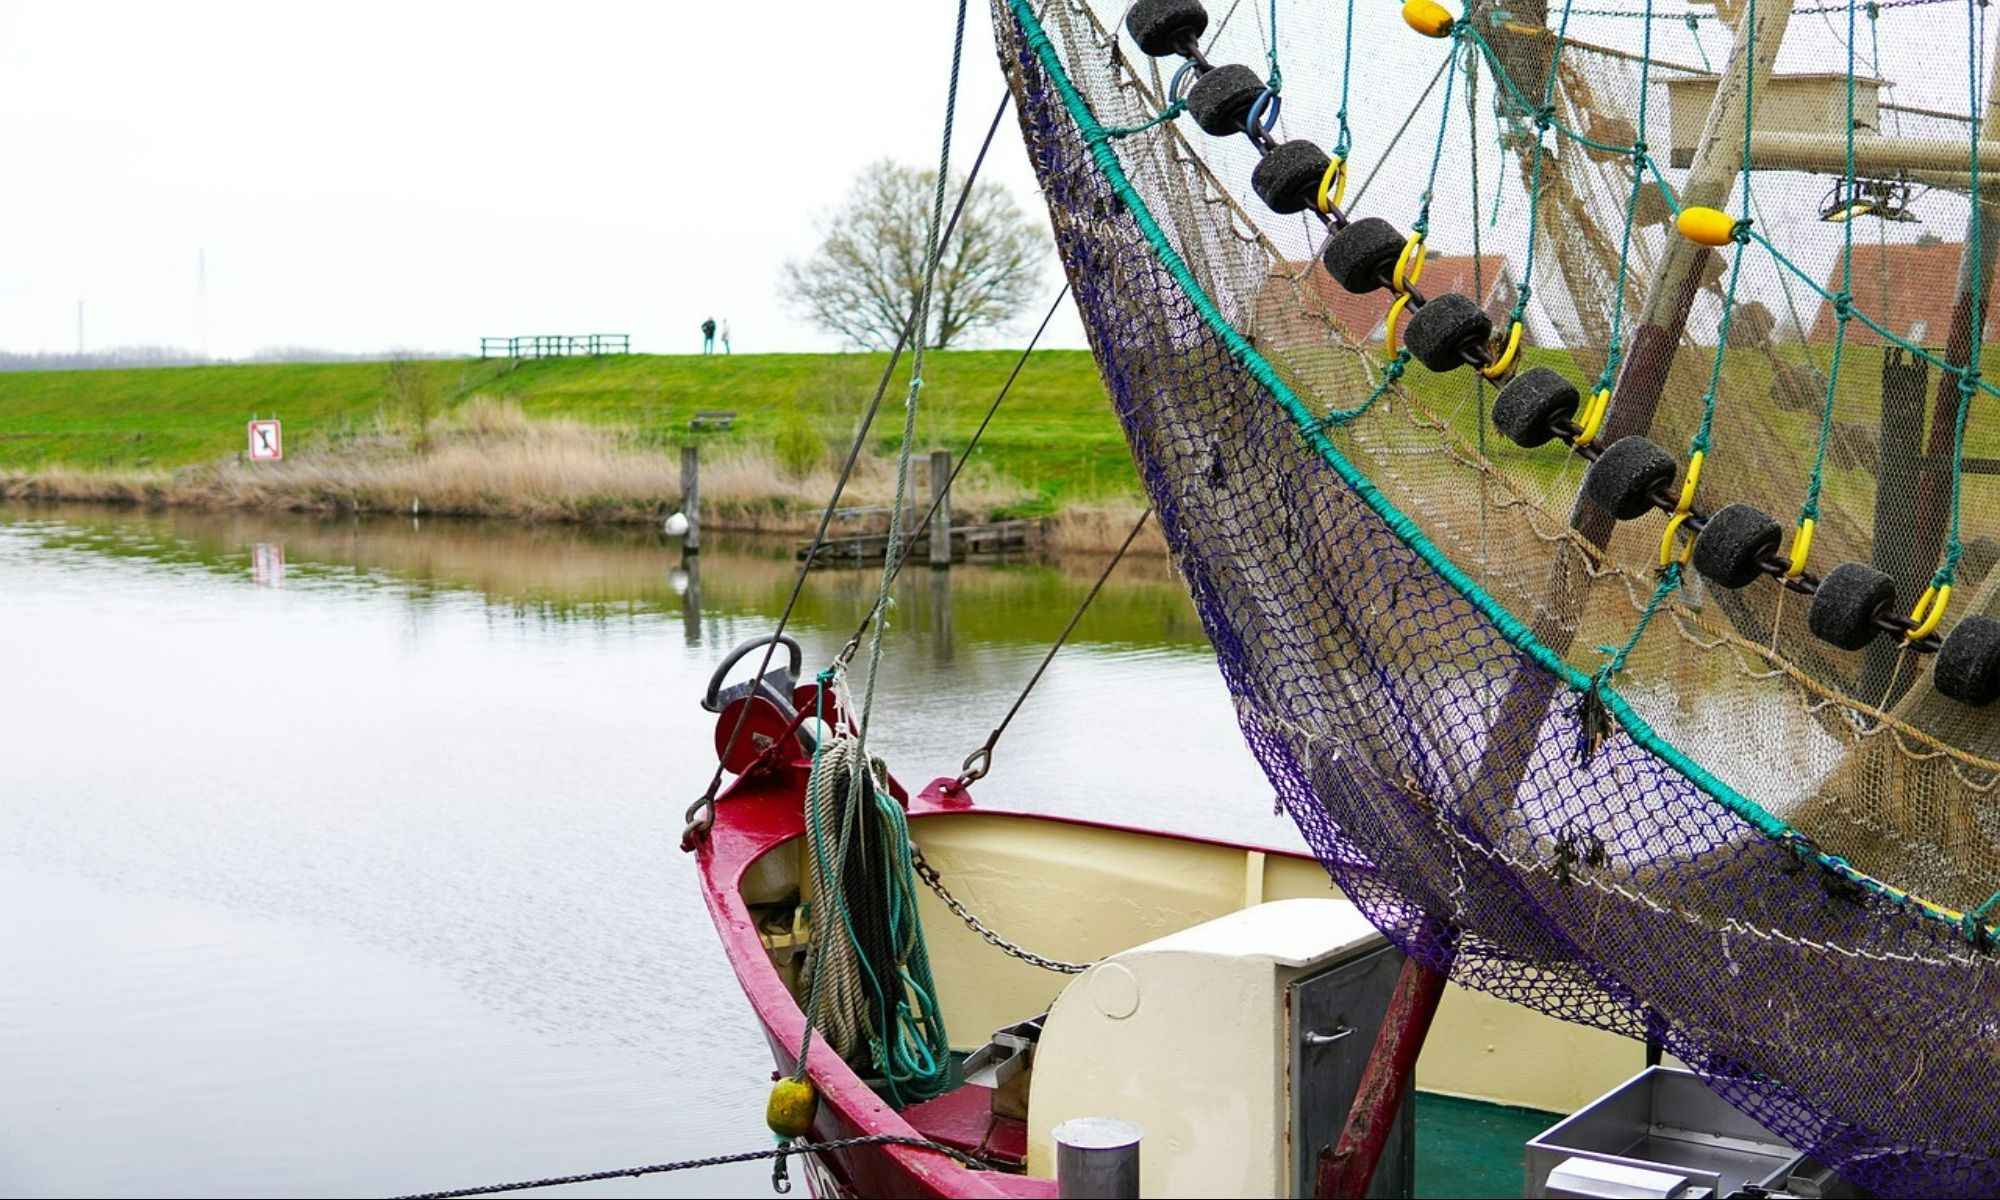 Buoy 10 Salmon Fishing: The Best Leader Line Setup